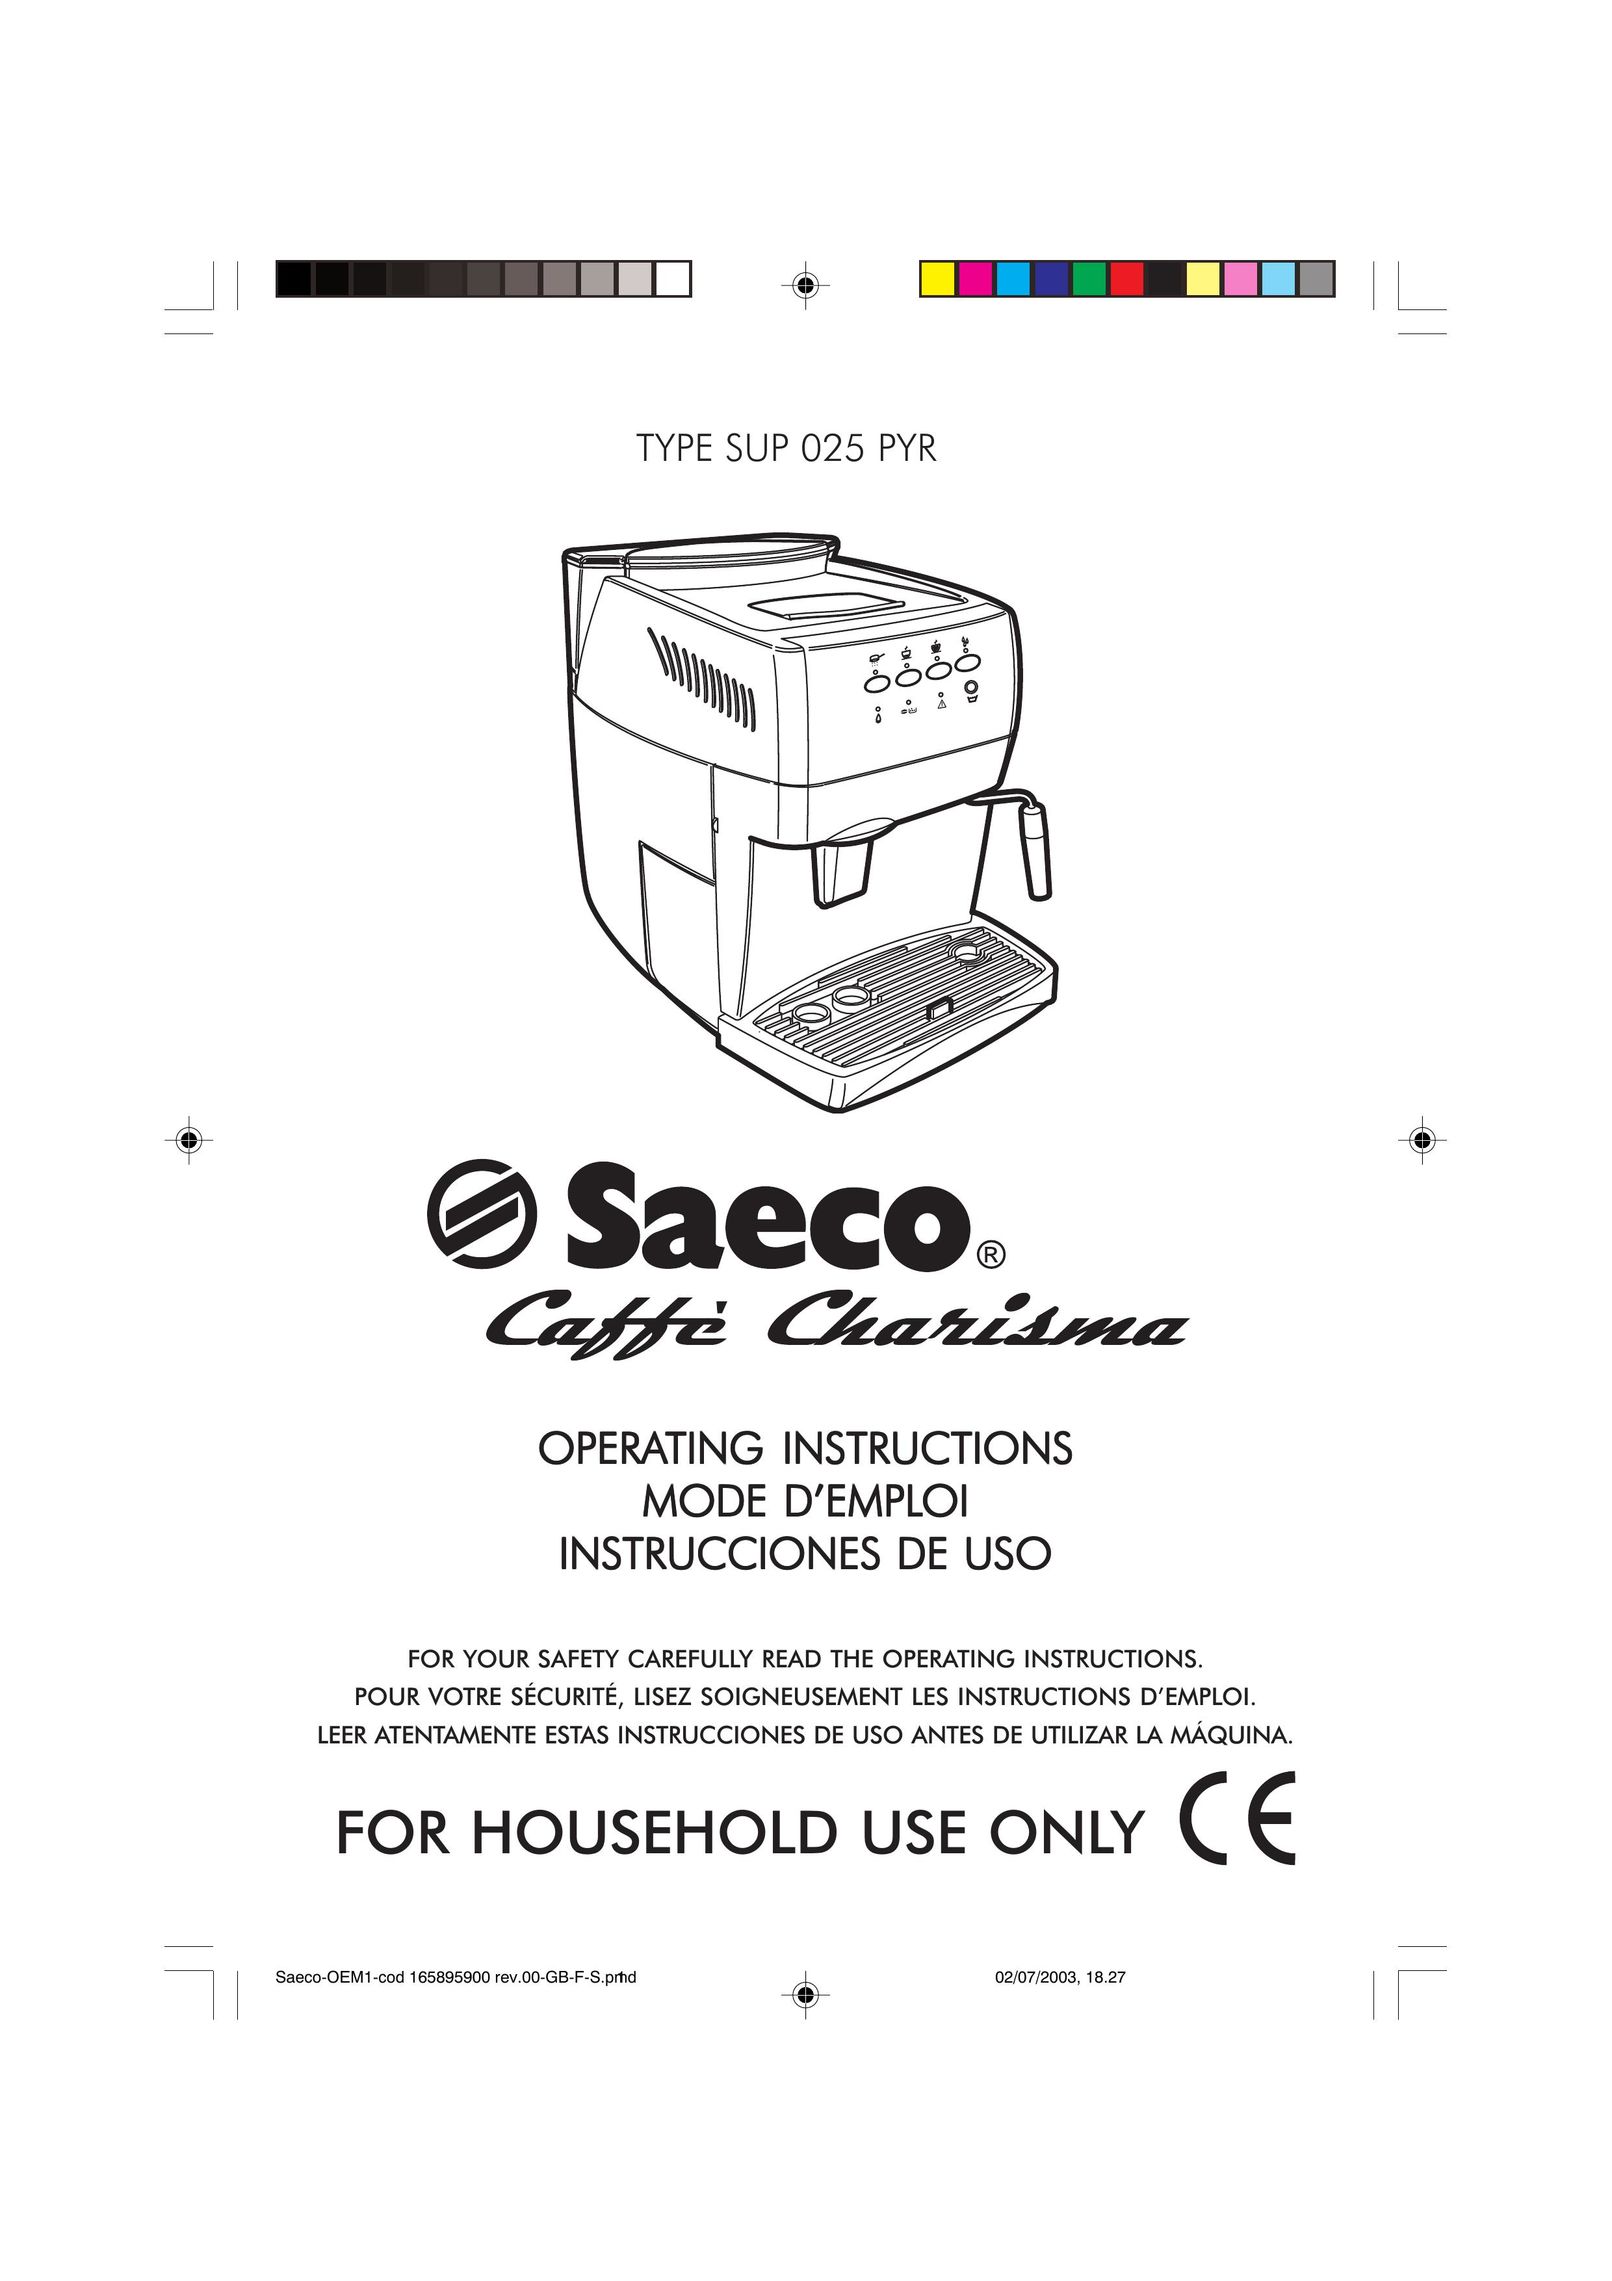 Saeco Coffee Makers SUP 025 PYR Coffeemaker User Manual